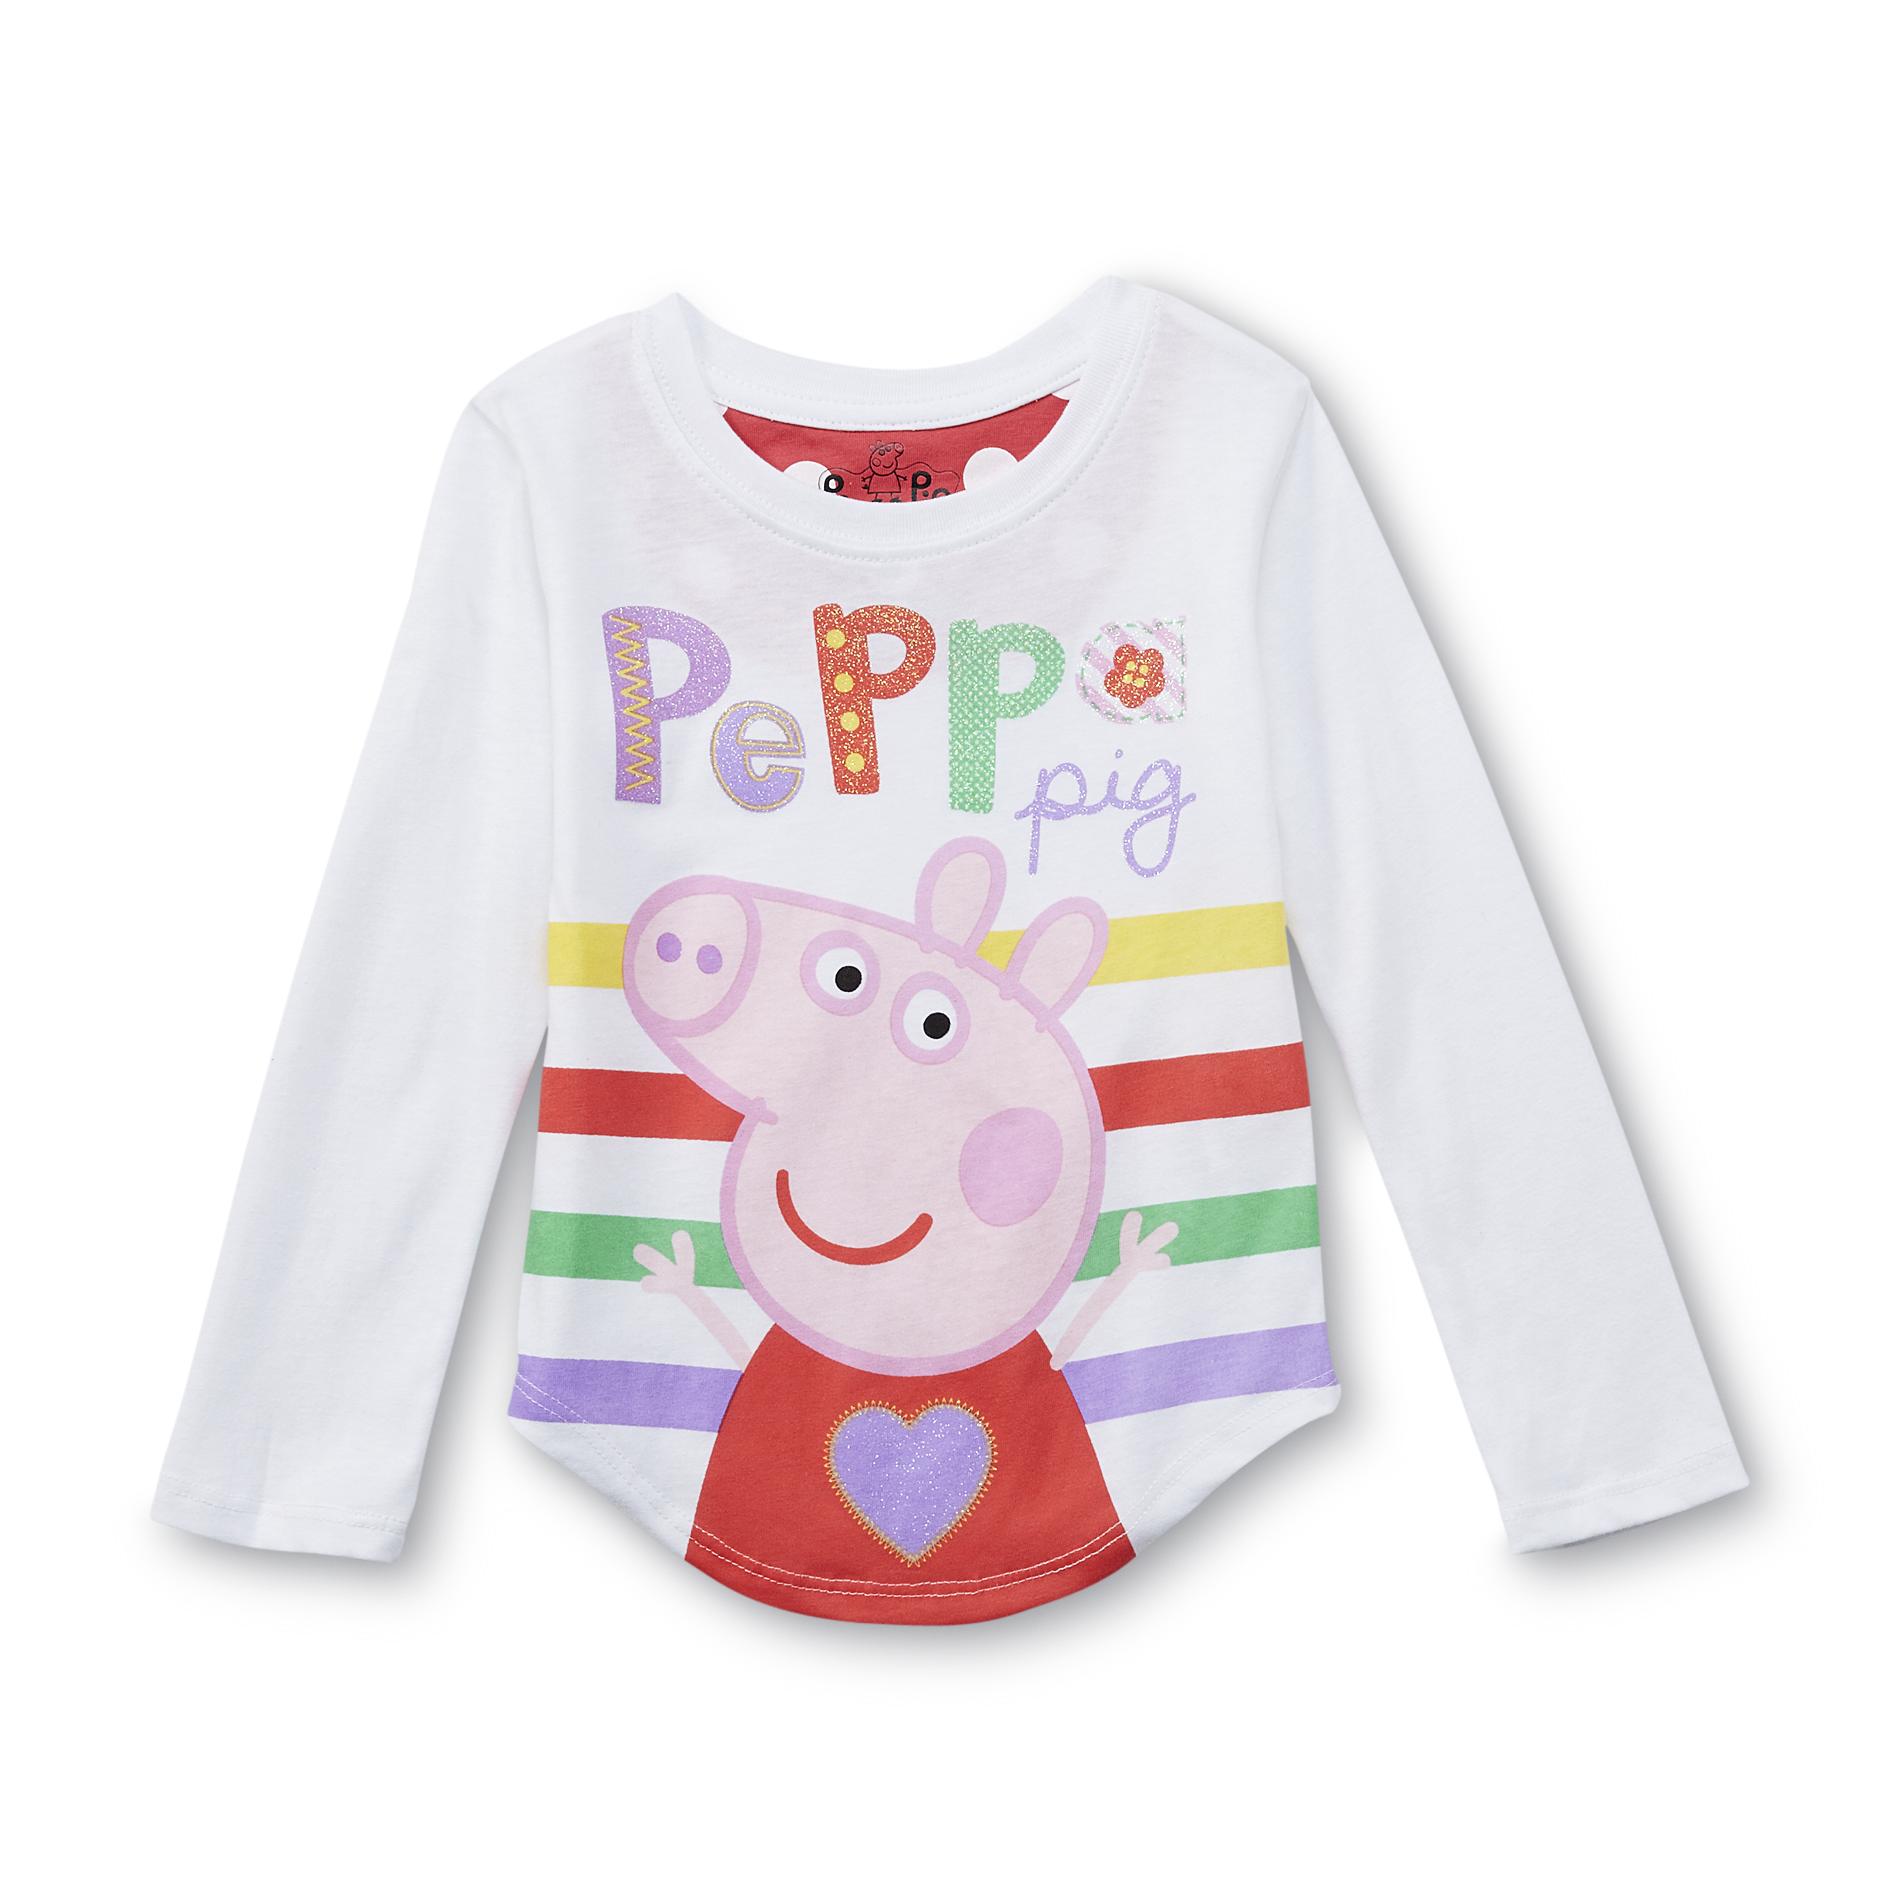 Nickelodeon Peppa Pig Toddler Girl's Long-Sleeve T-Shirt